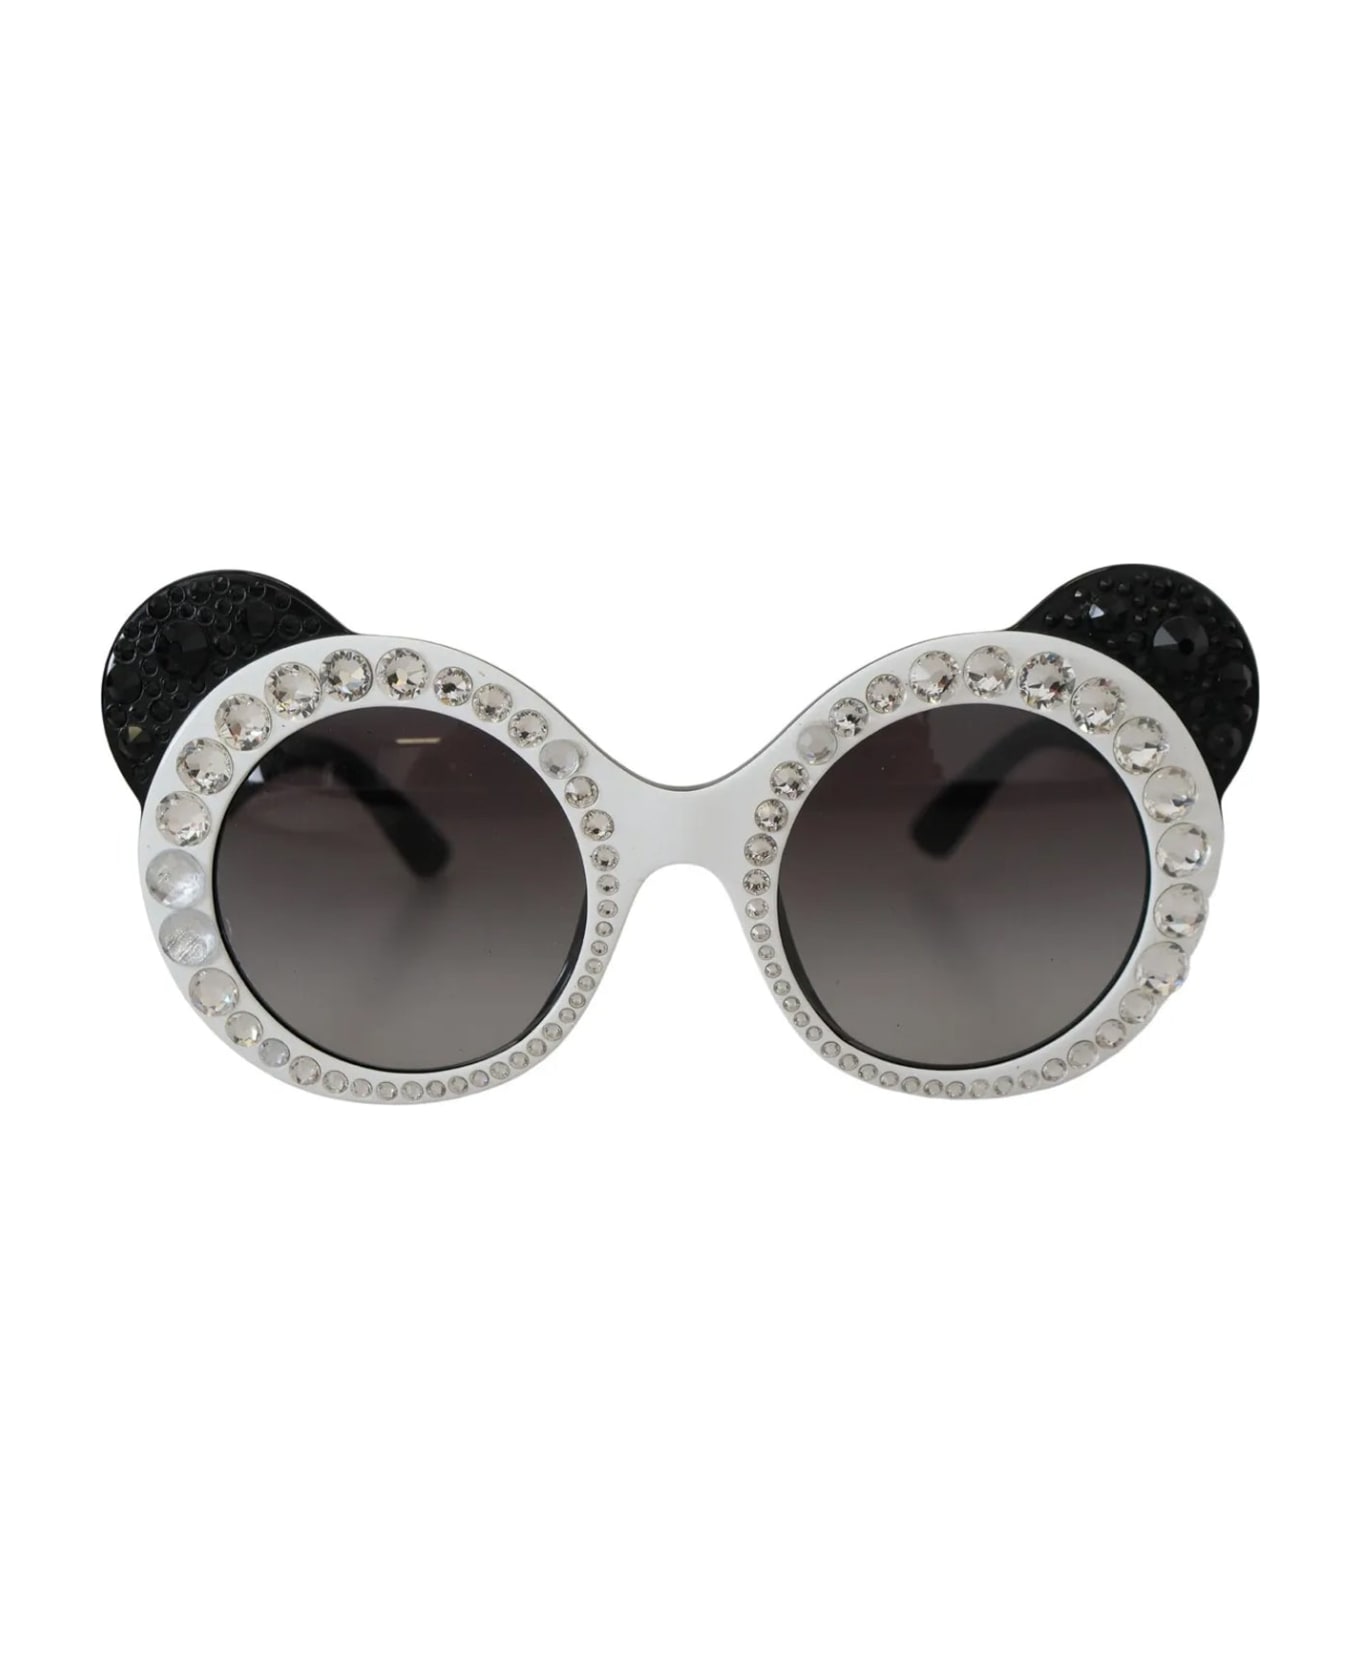 Dolce & Gabbana Sunglasses - Black サングラス